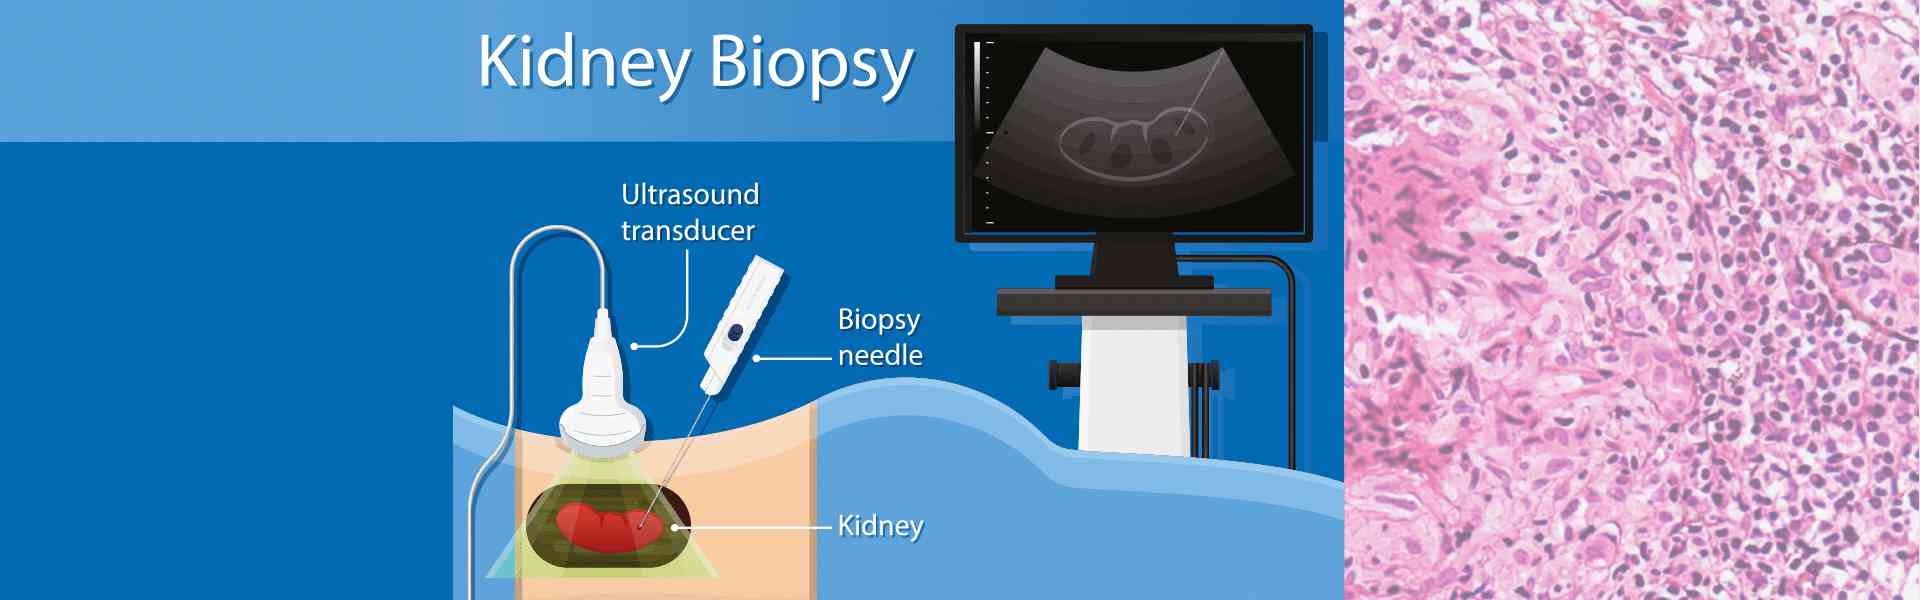 Kidney Biopsy Treatment in Salt Lake